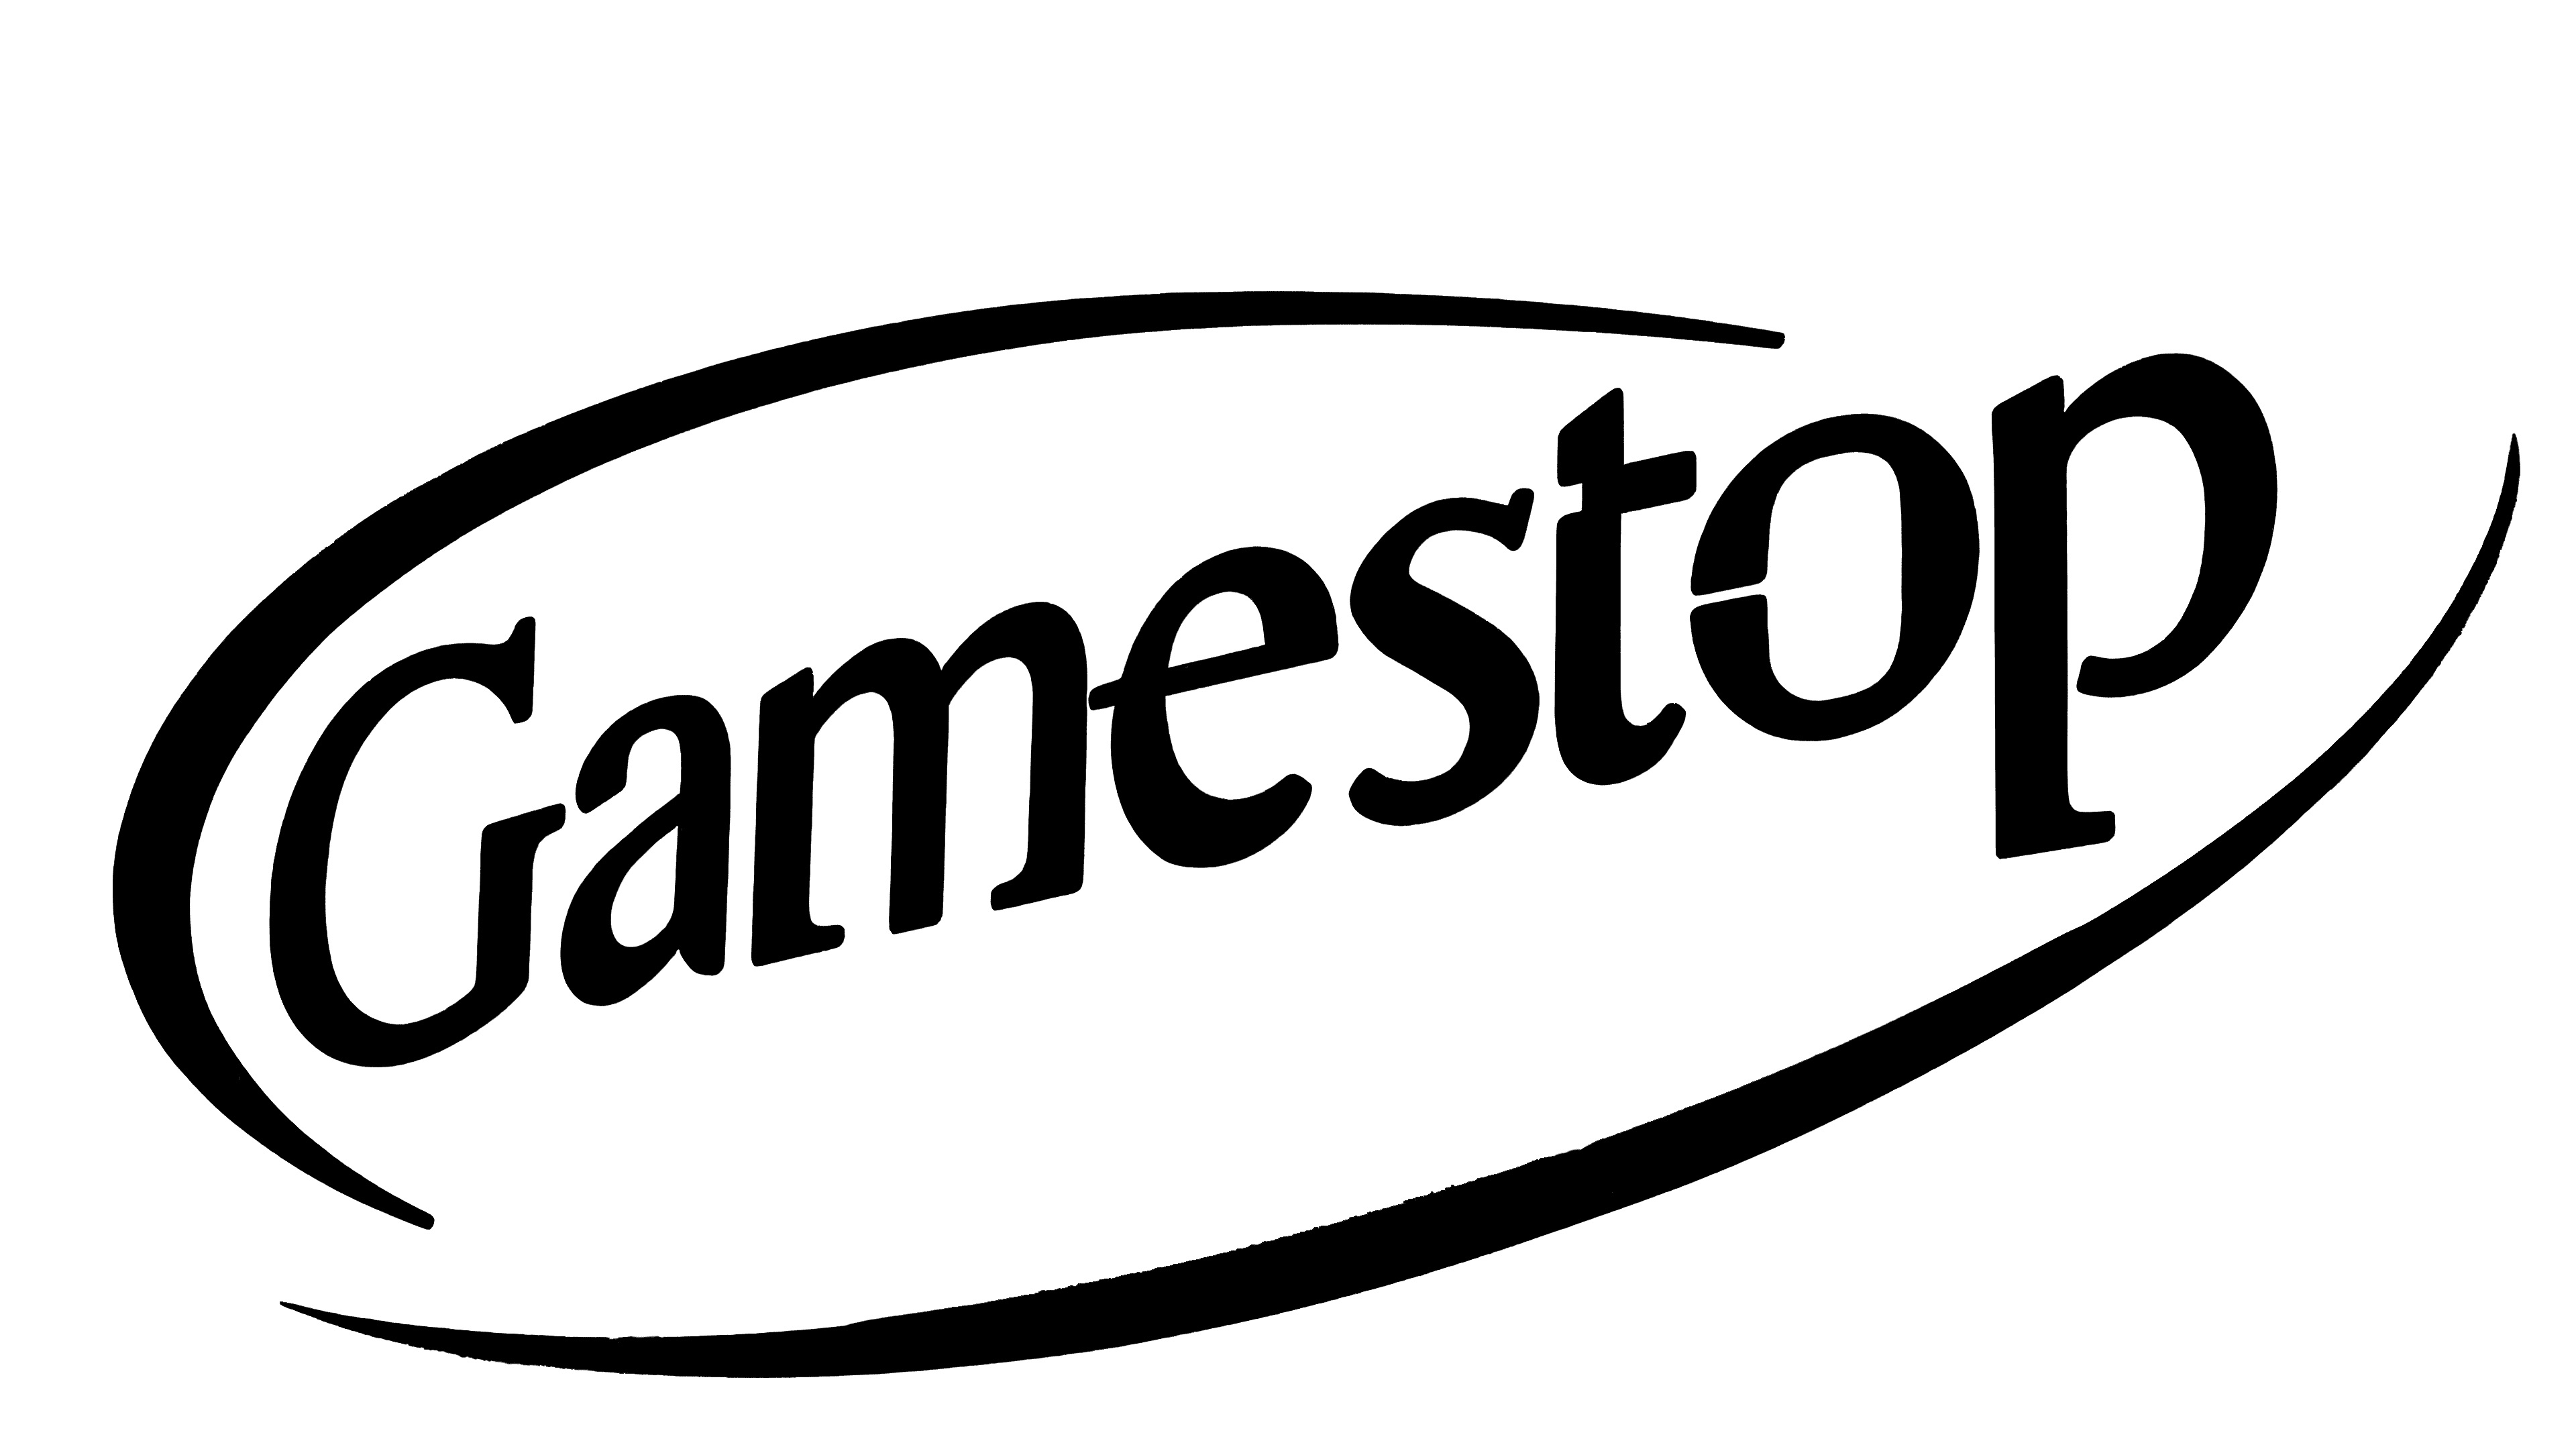 GameStop uses this logo?